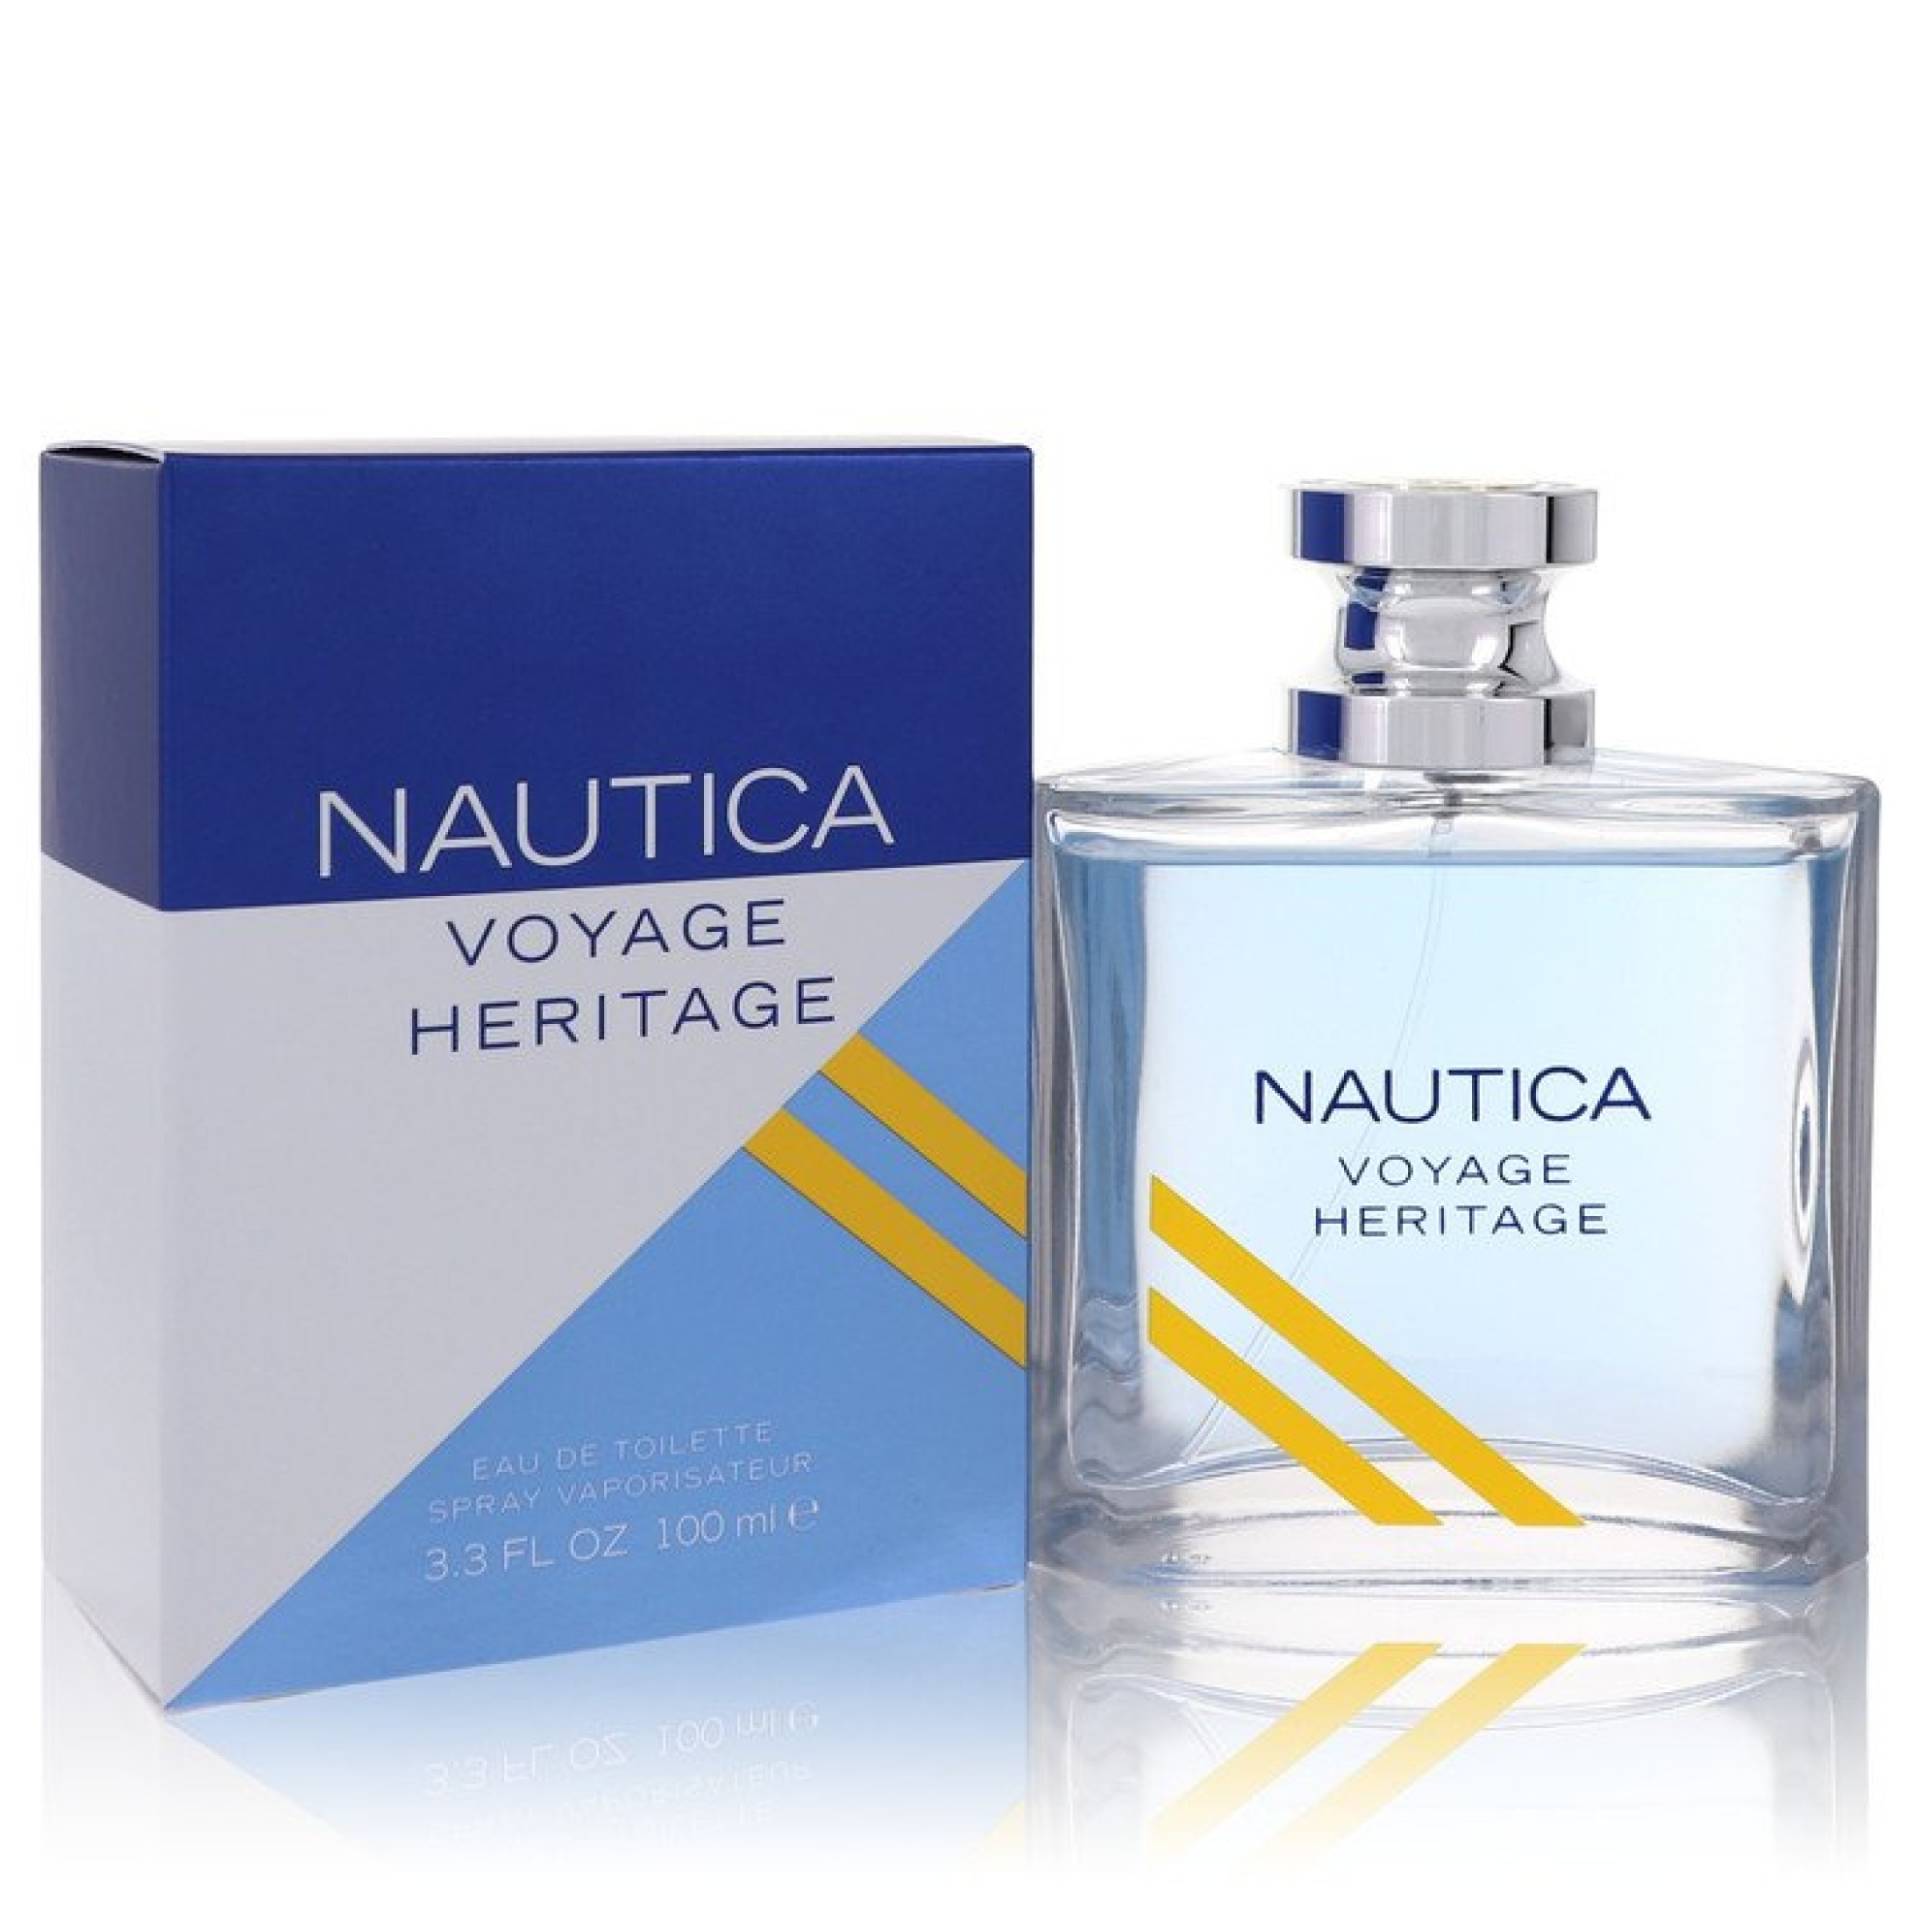 Nautica Voyage Heritage Eau De Toilette Spray 100 ml von Nautica